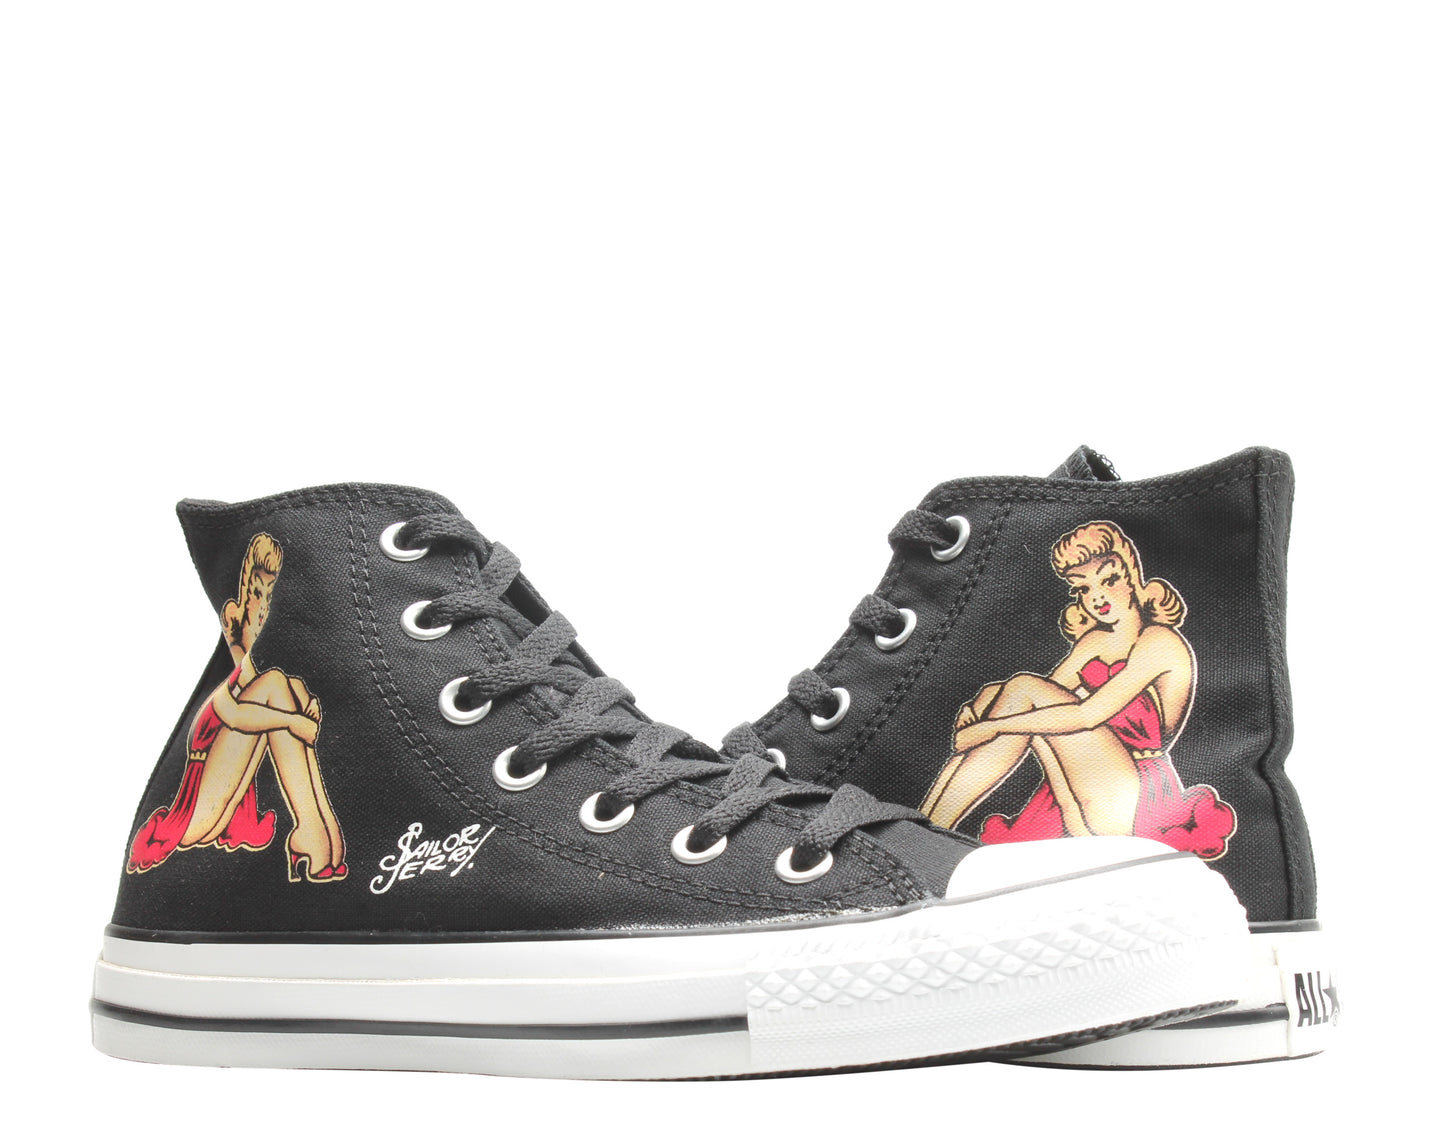 Converse Chuck Taylor All Star Sailor Jerry Pin-Up Hi Sneakers